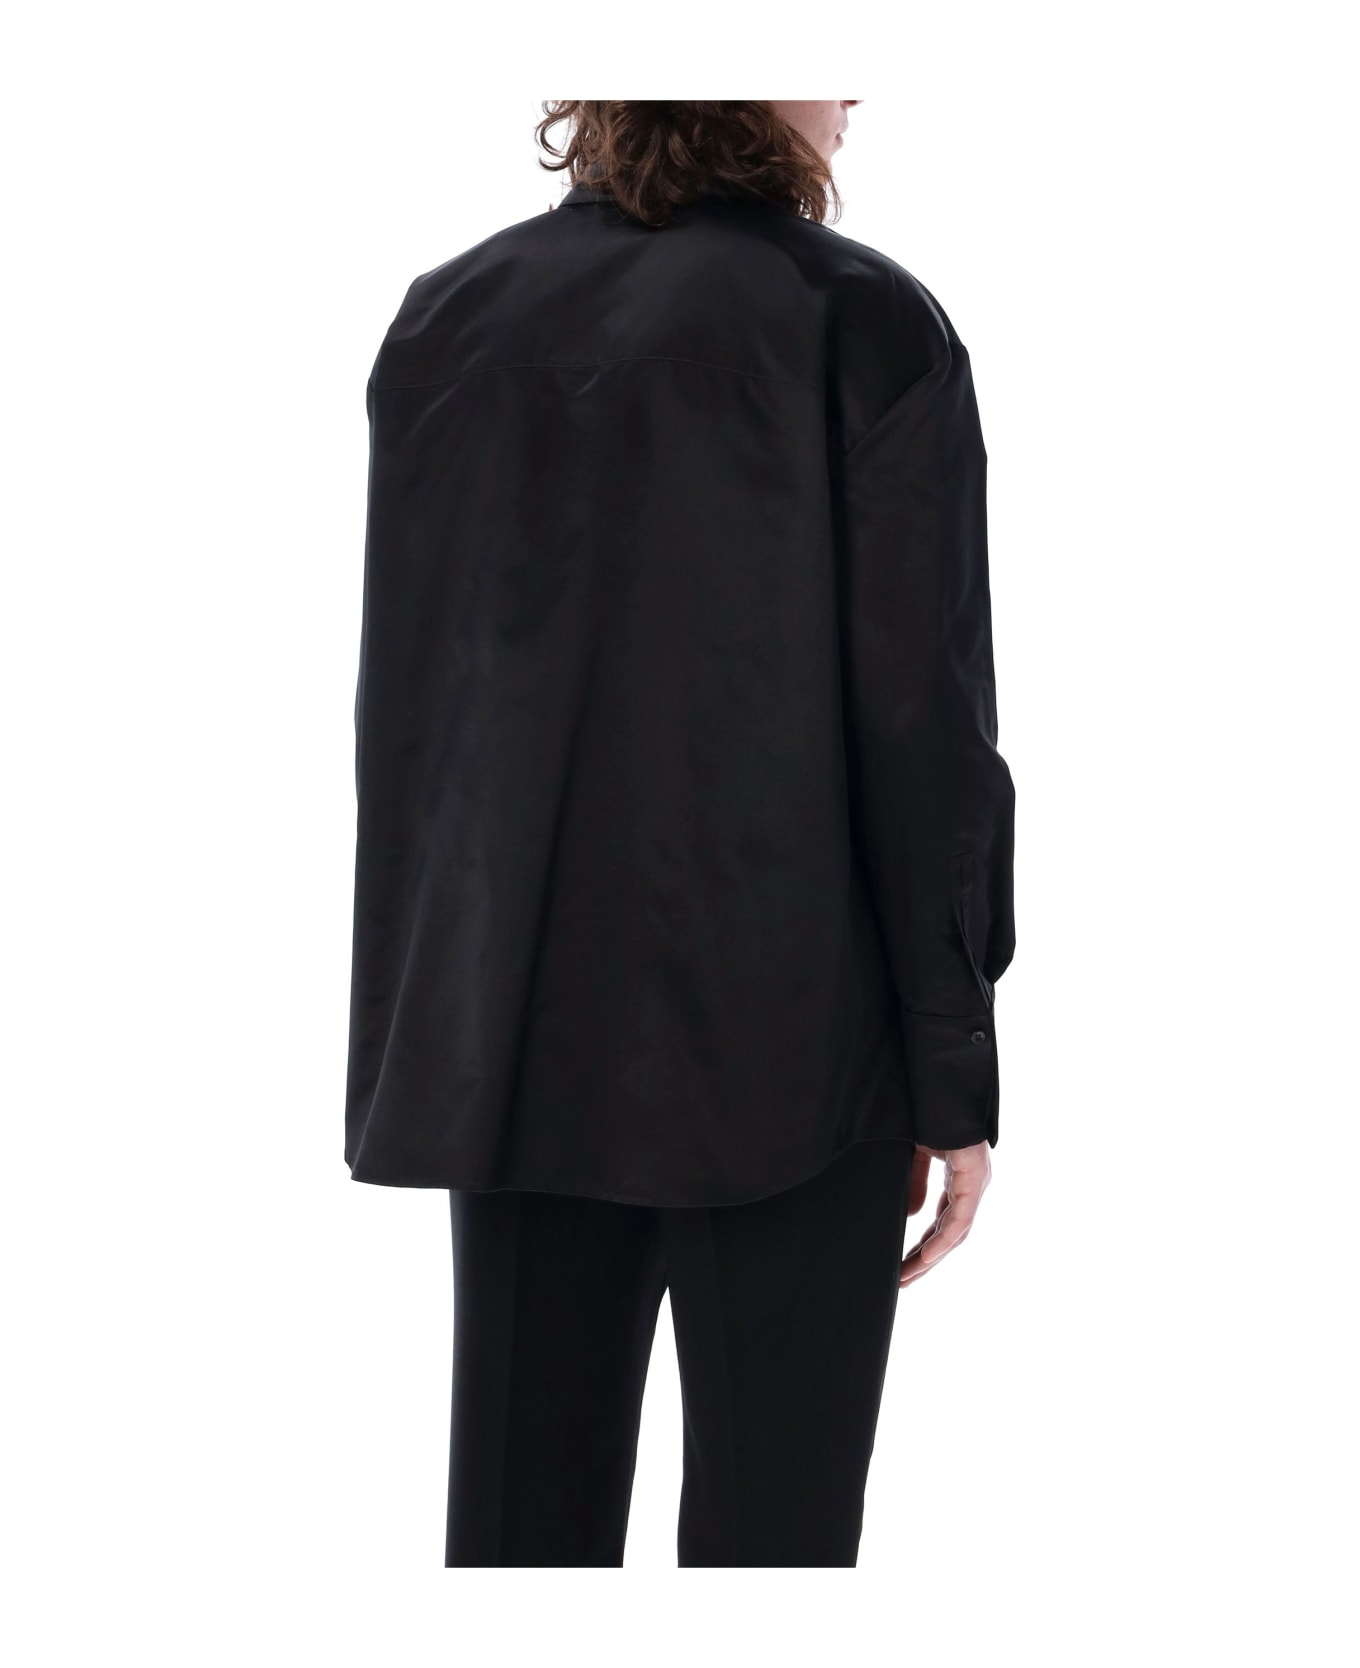 Saint Laurent Oversized Shirt - Black